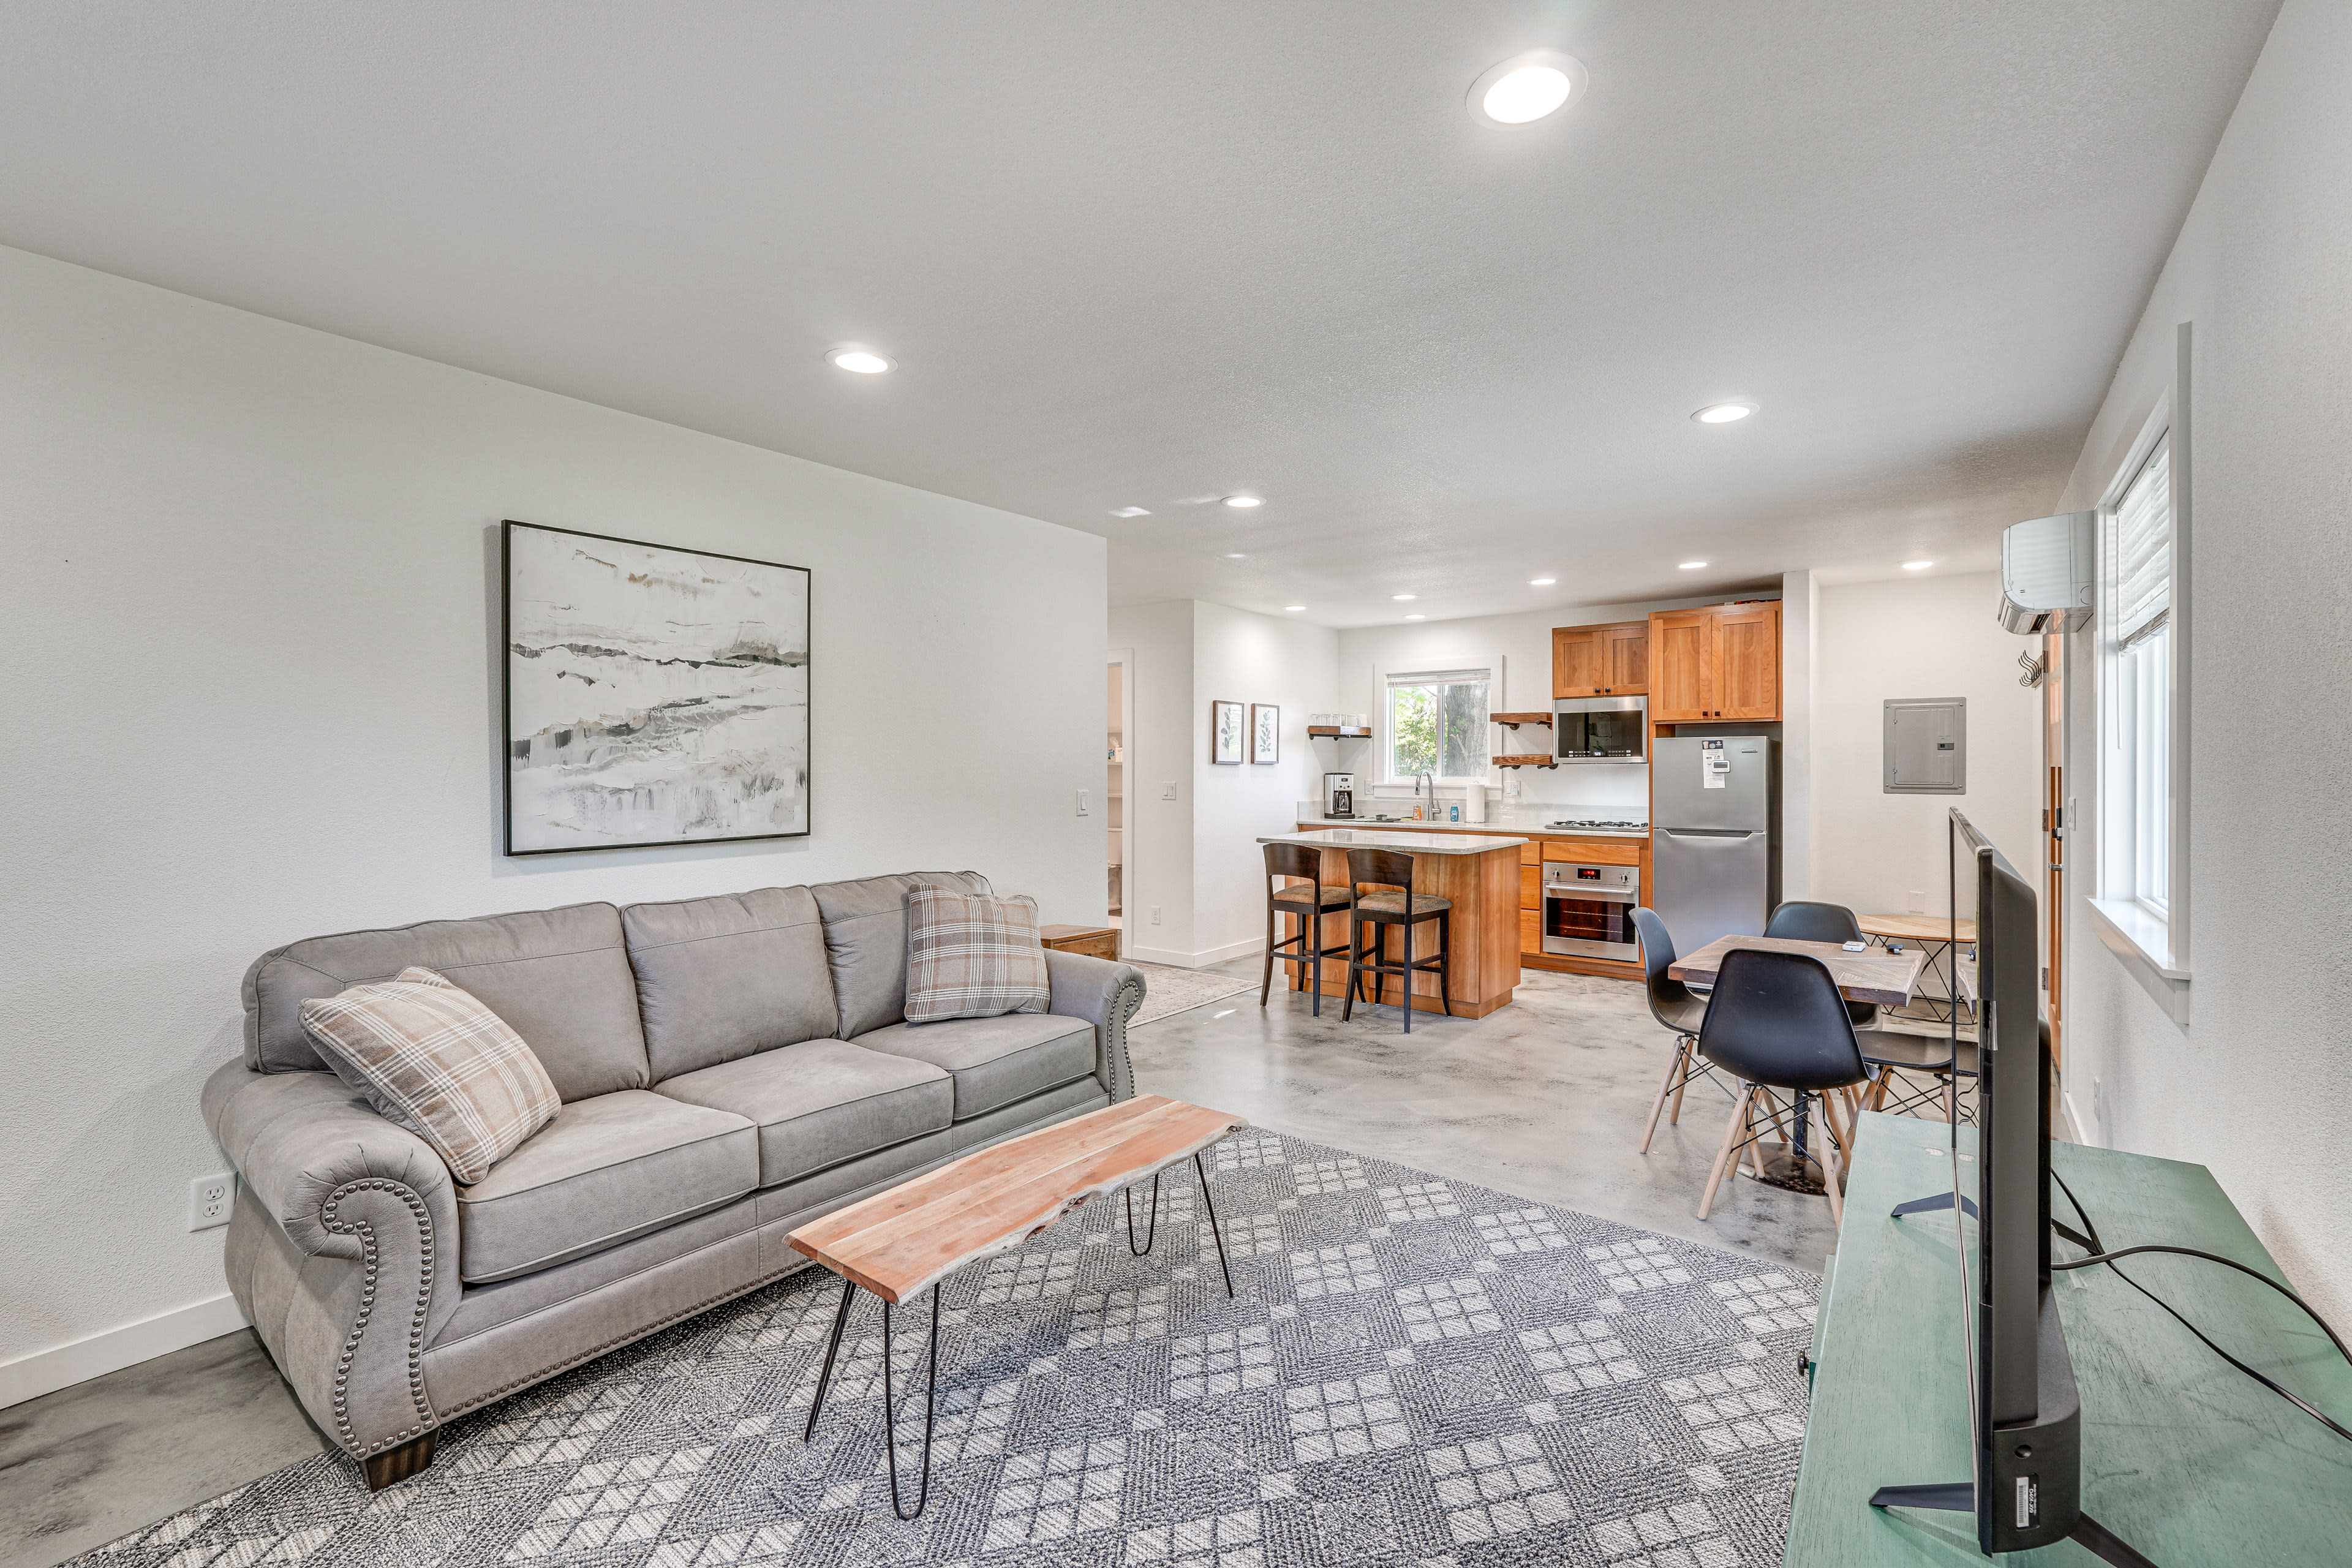 Living Room | Smart TV | Single-Story Home